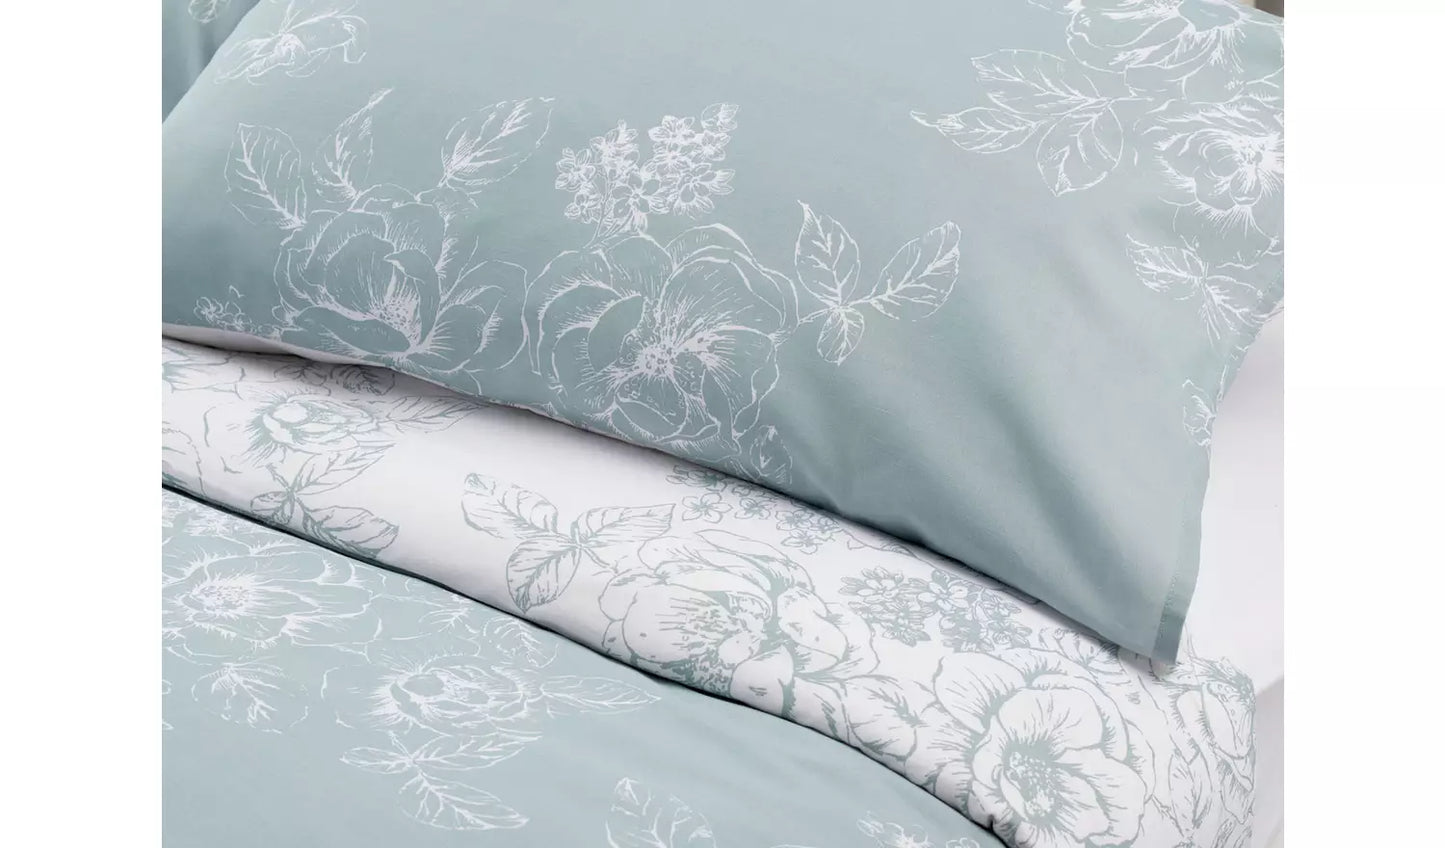 Argos Home Classic Floral Blue & White Bedding Set -Kingsize